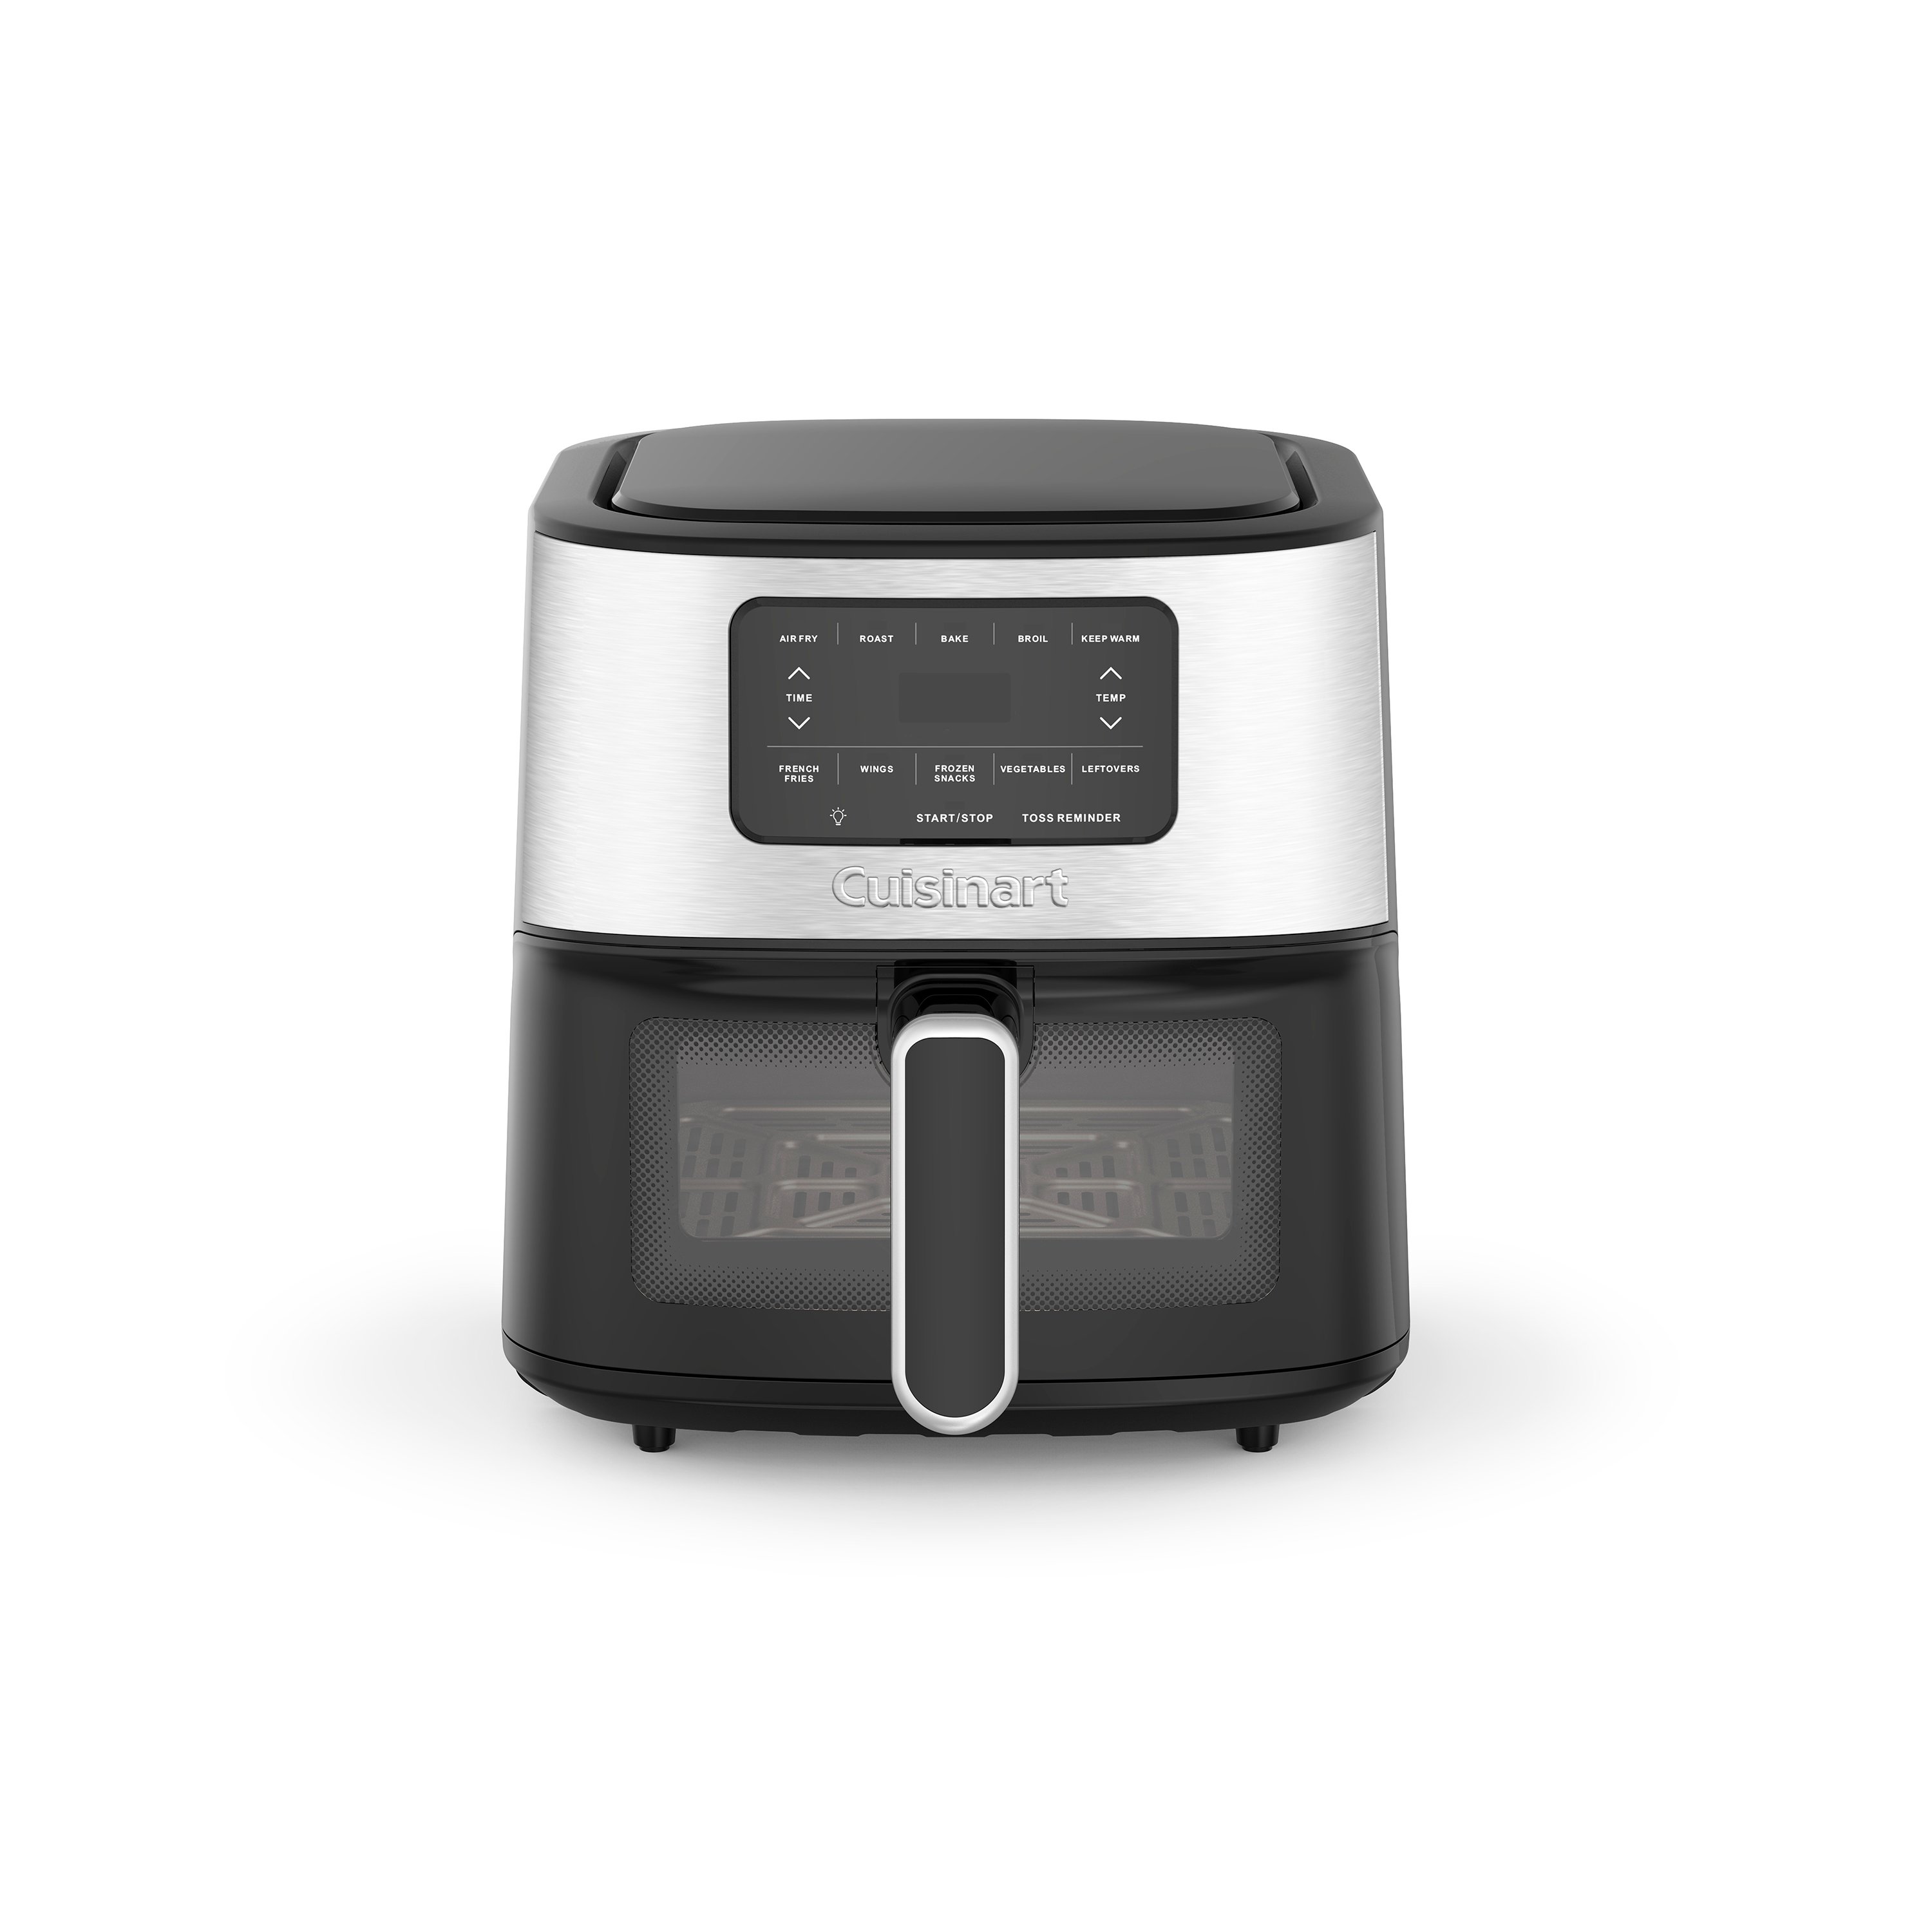 Gourmia 6-qt. Air Fryer New! - appliances - by owner - sale